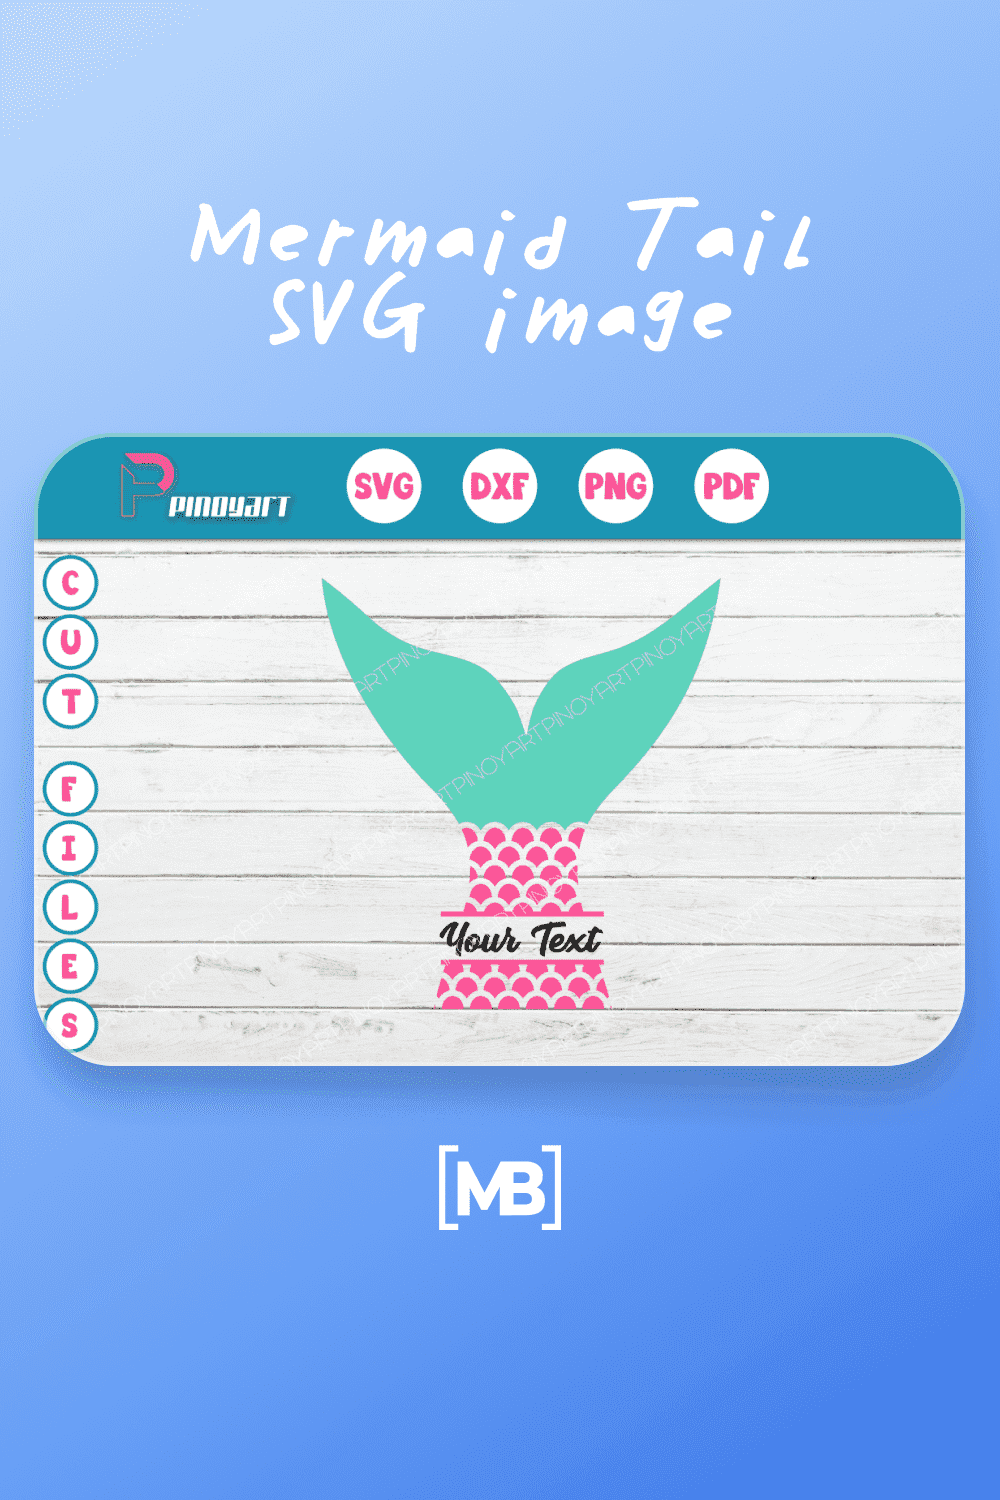 Mermaid Tail SVG image.